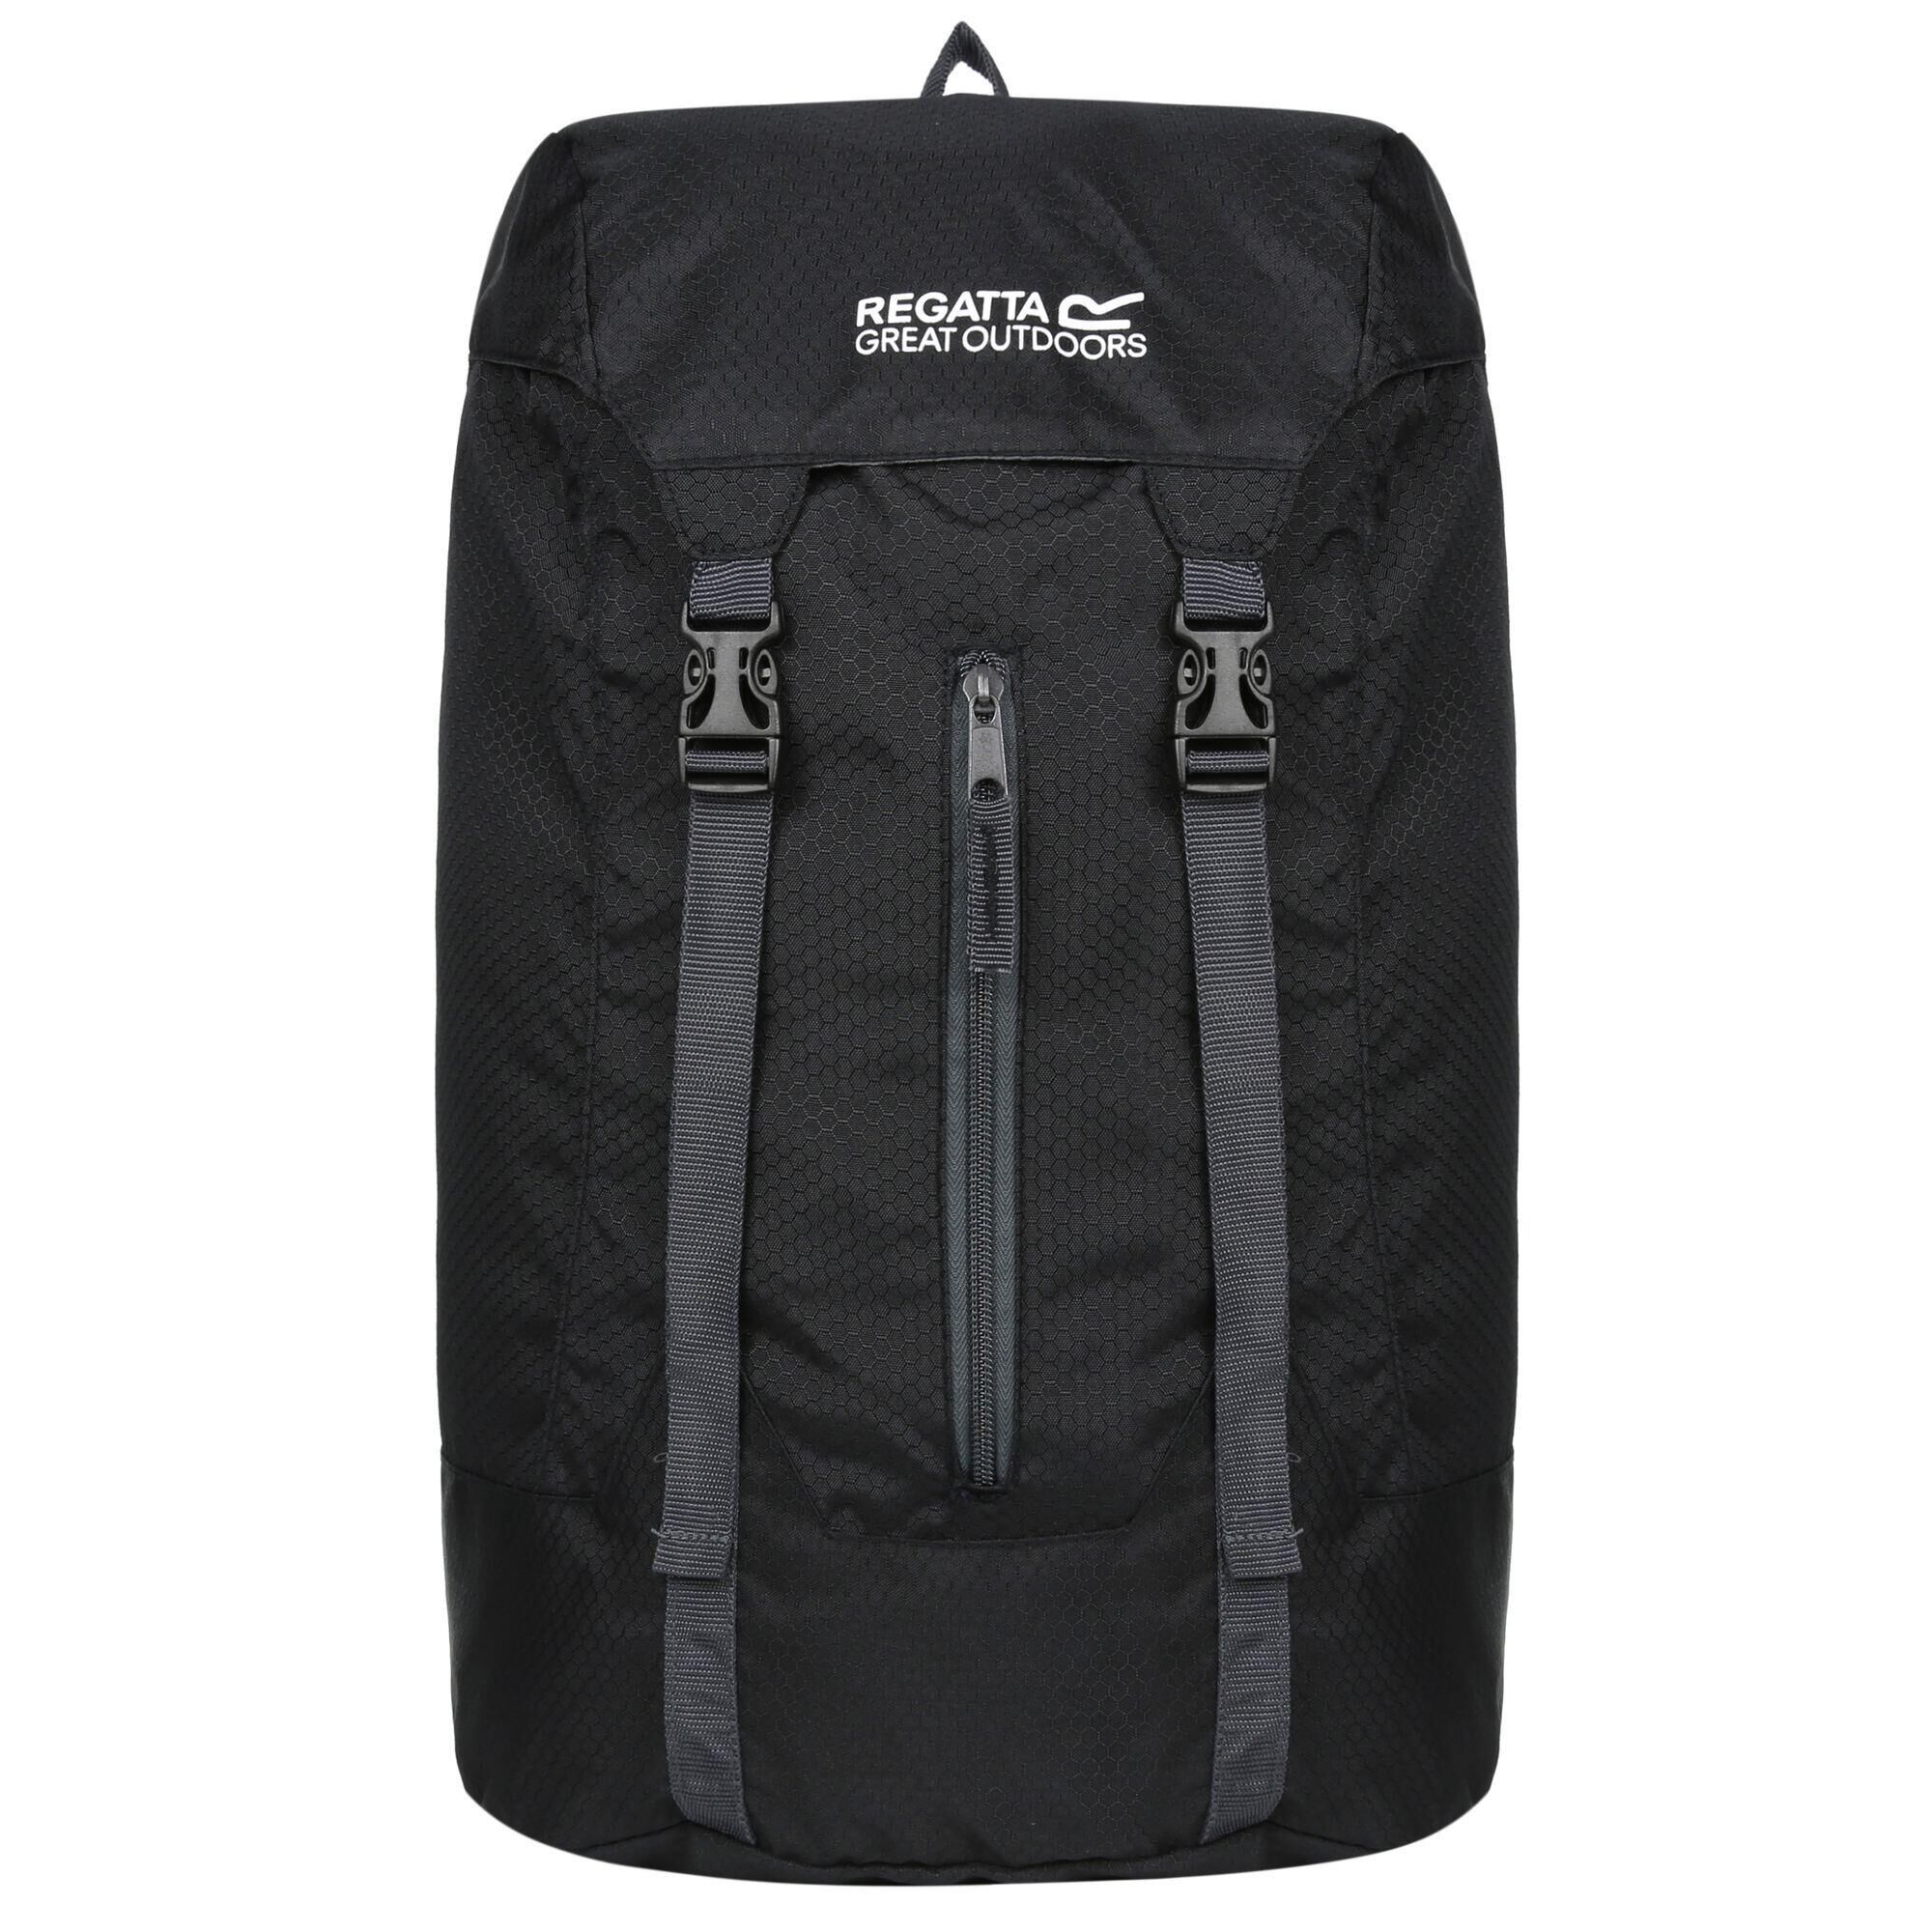 REGATTA Great Outdoors Easypack Packaway Rucksack/Backpack (25 Litres) (Black)